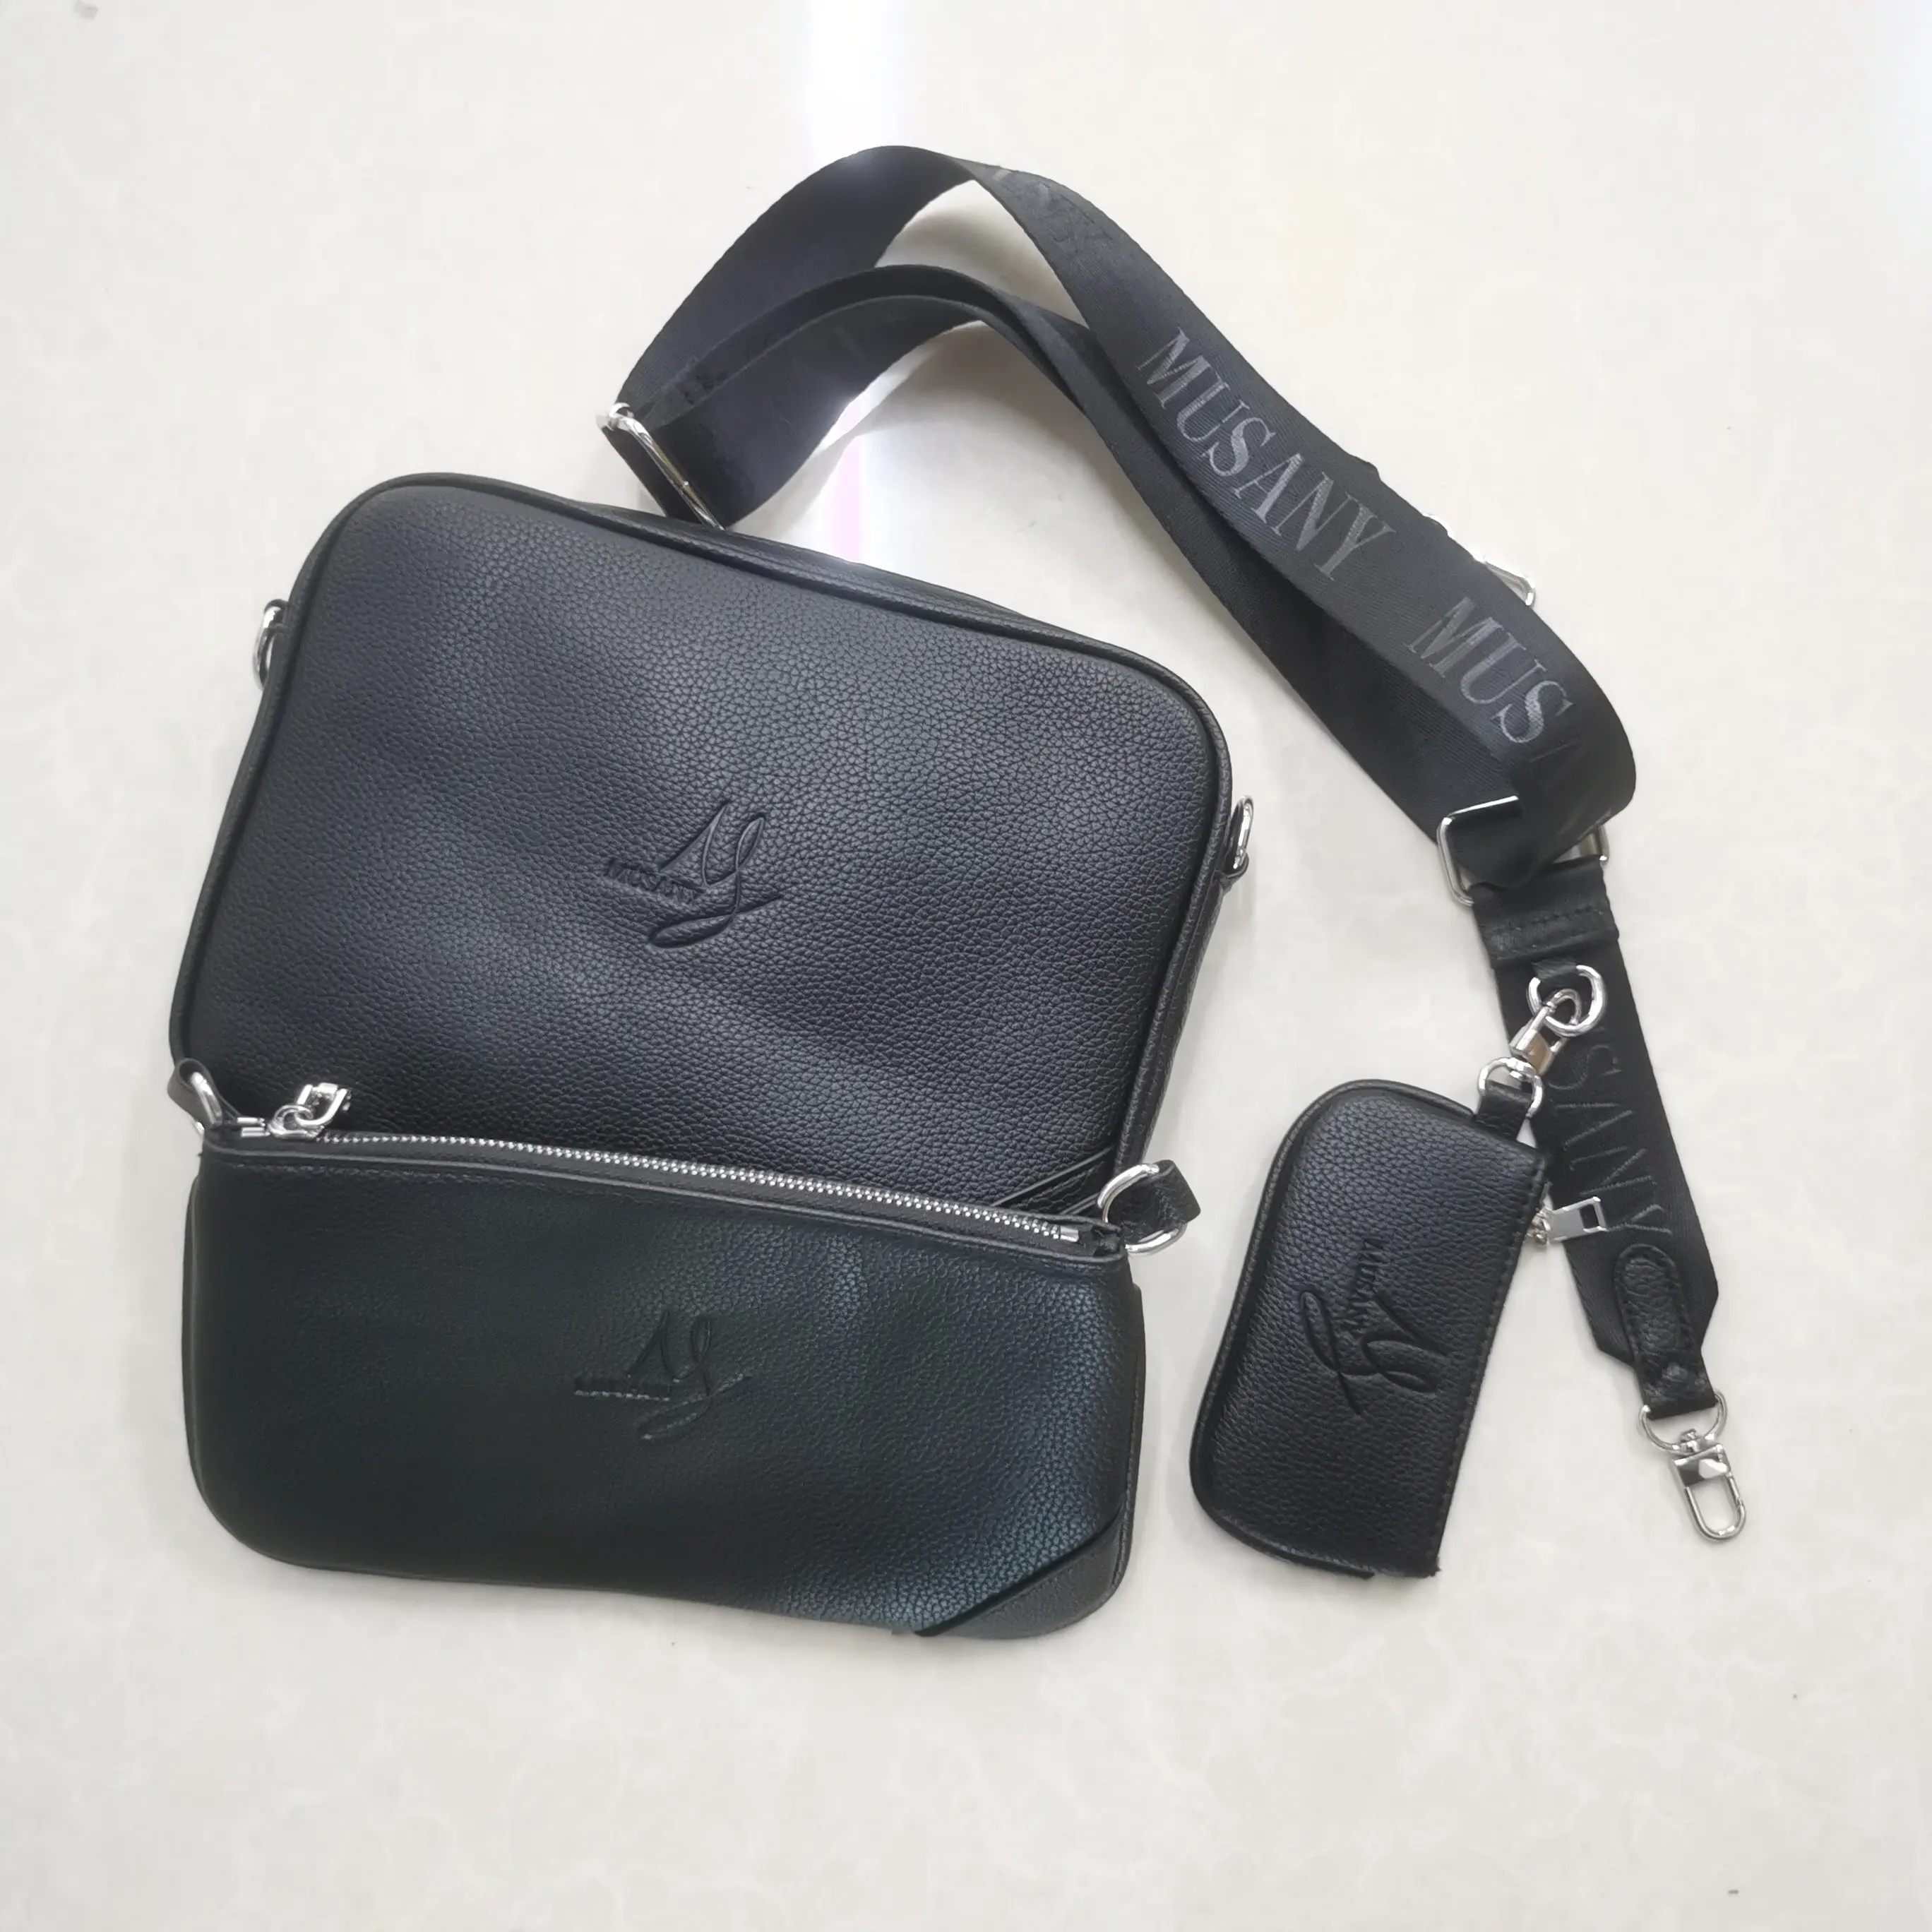 BG251 new fashion messenger bags for men 3-in-1 messenger handbags shoulder bags vintage bags